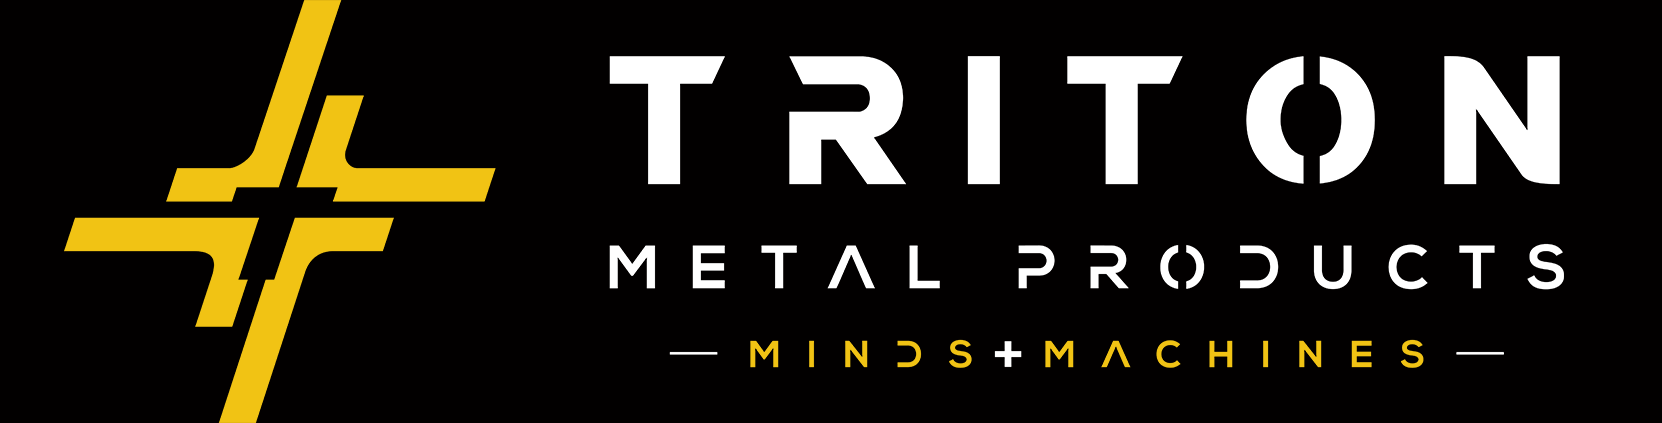 Triton Metal Products